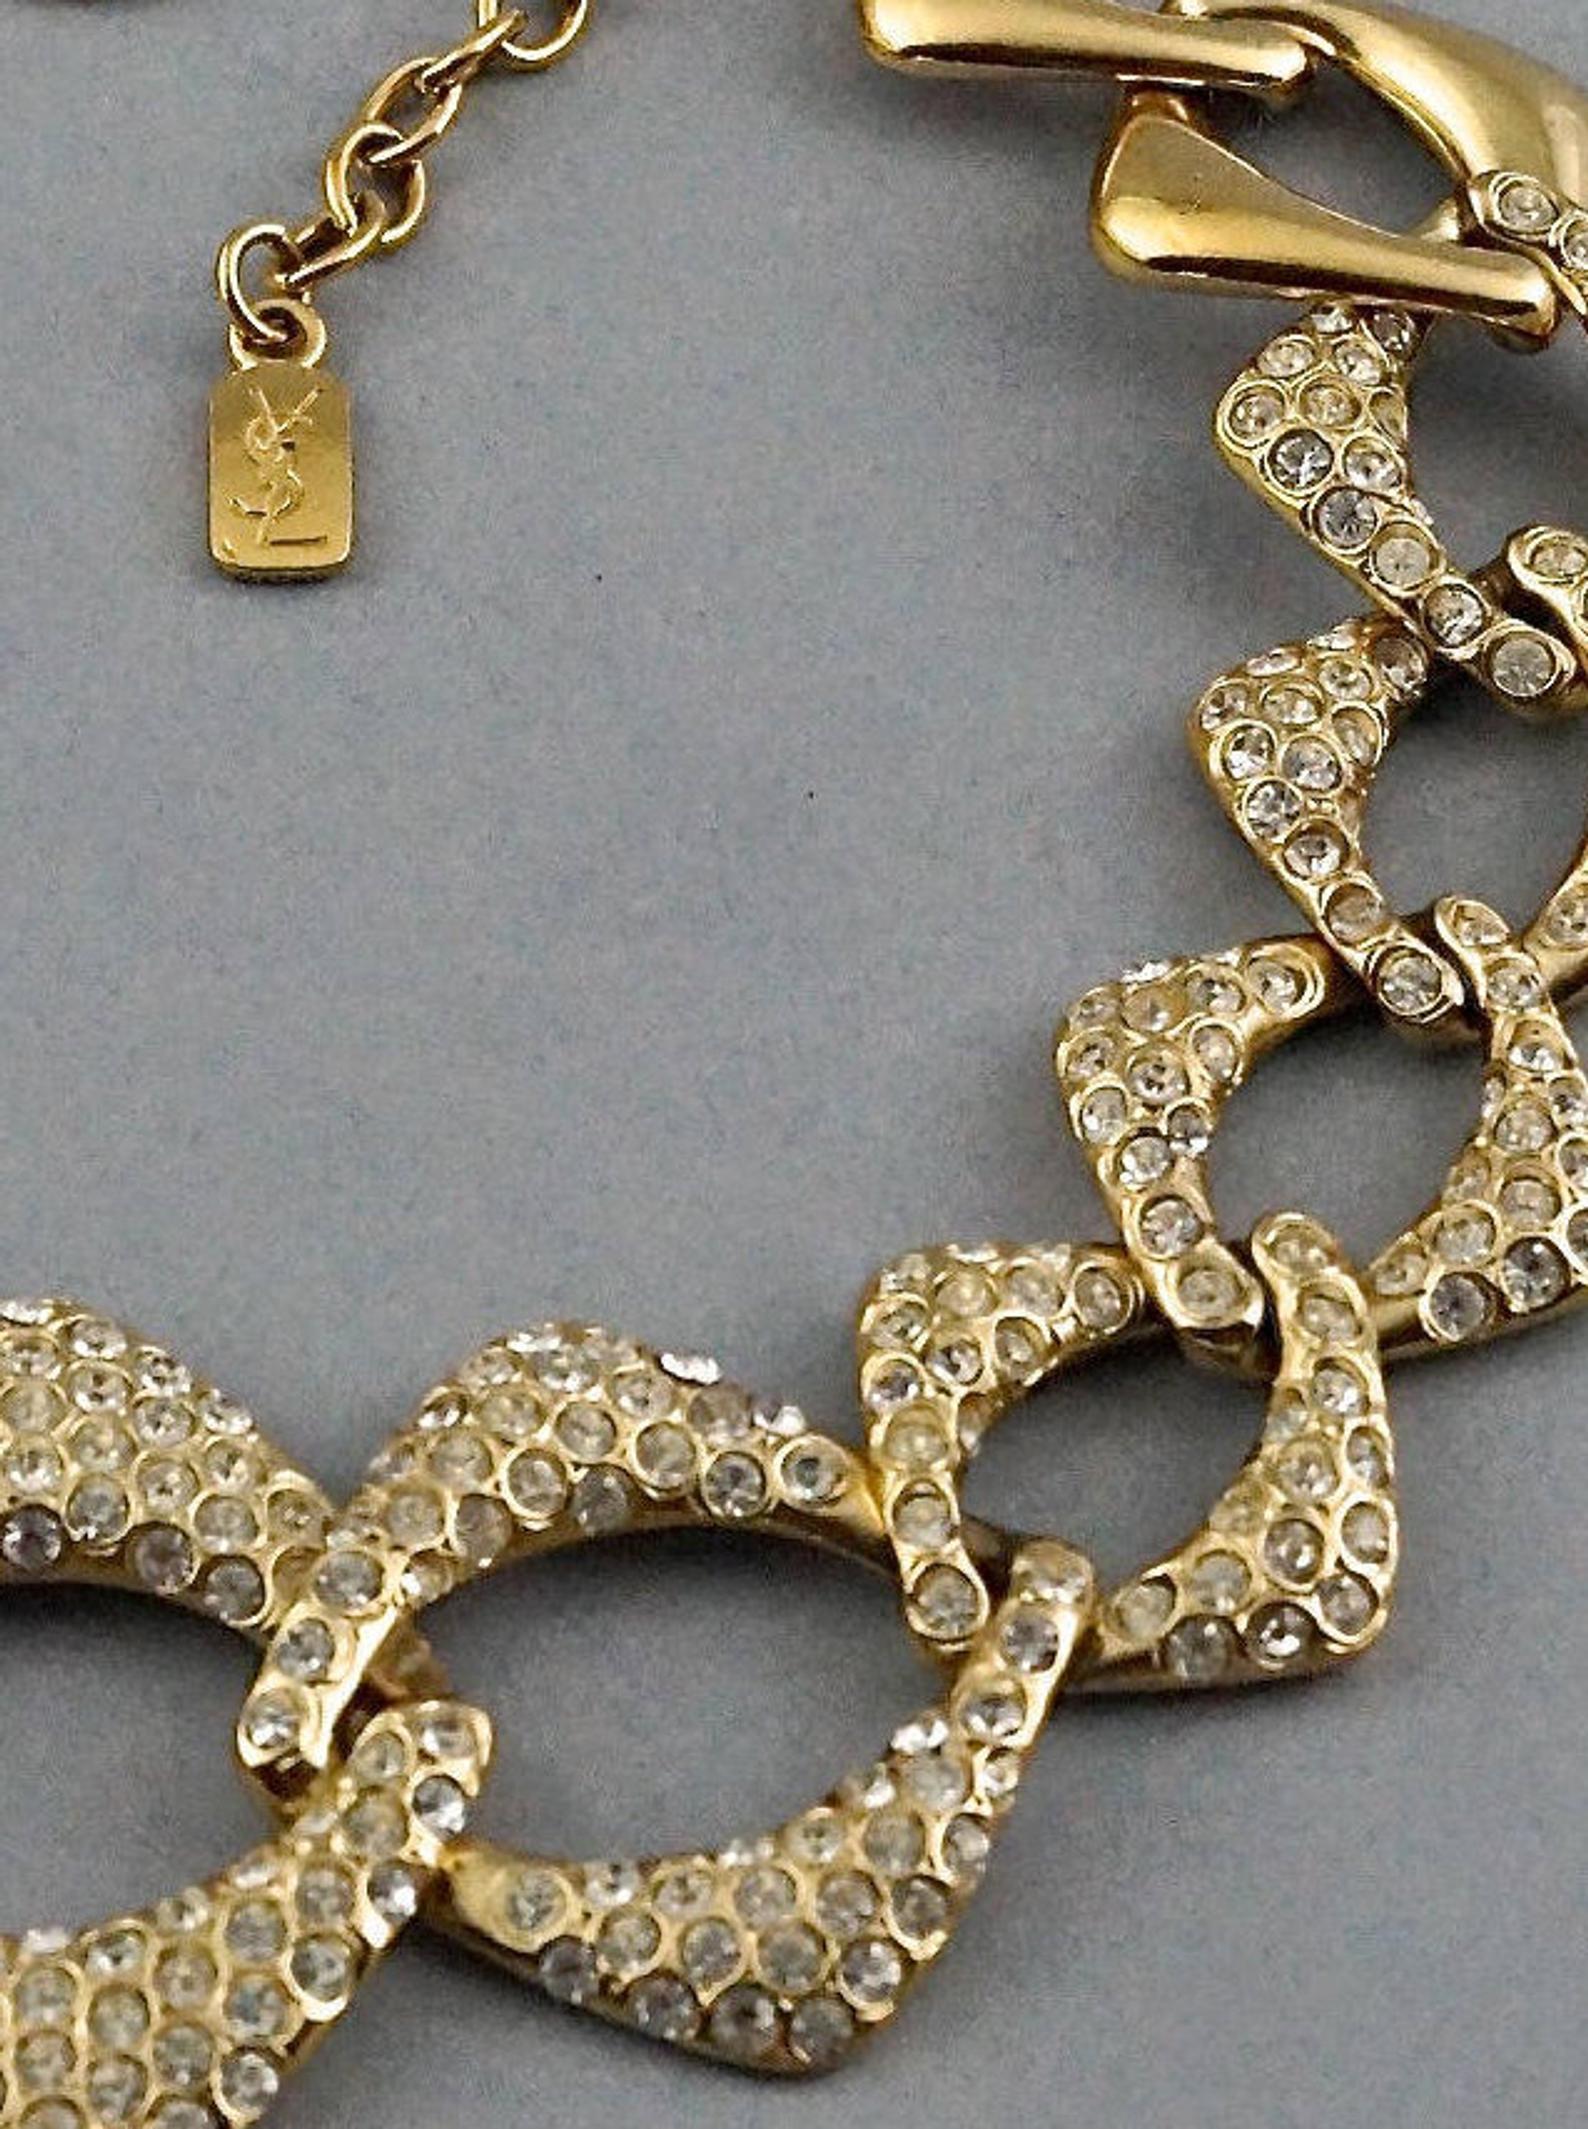 YVES SAINT LAURENT Ysl by Robert Goossens Rhinestone Chain Choker Necklace For Sale 2